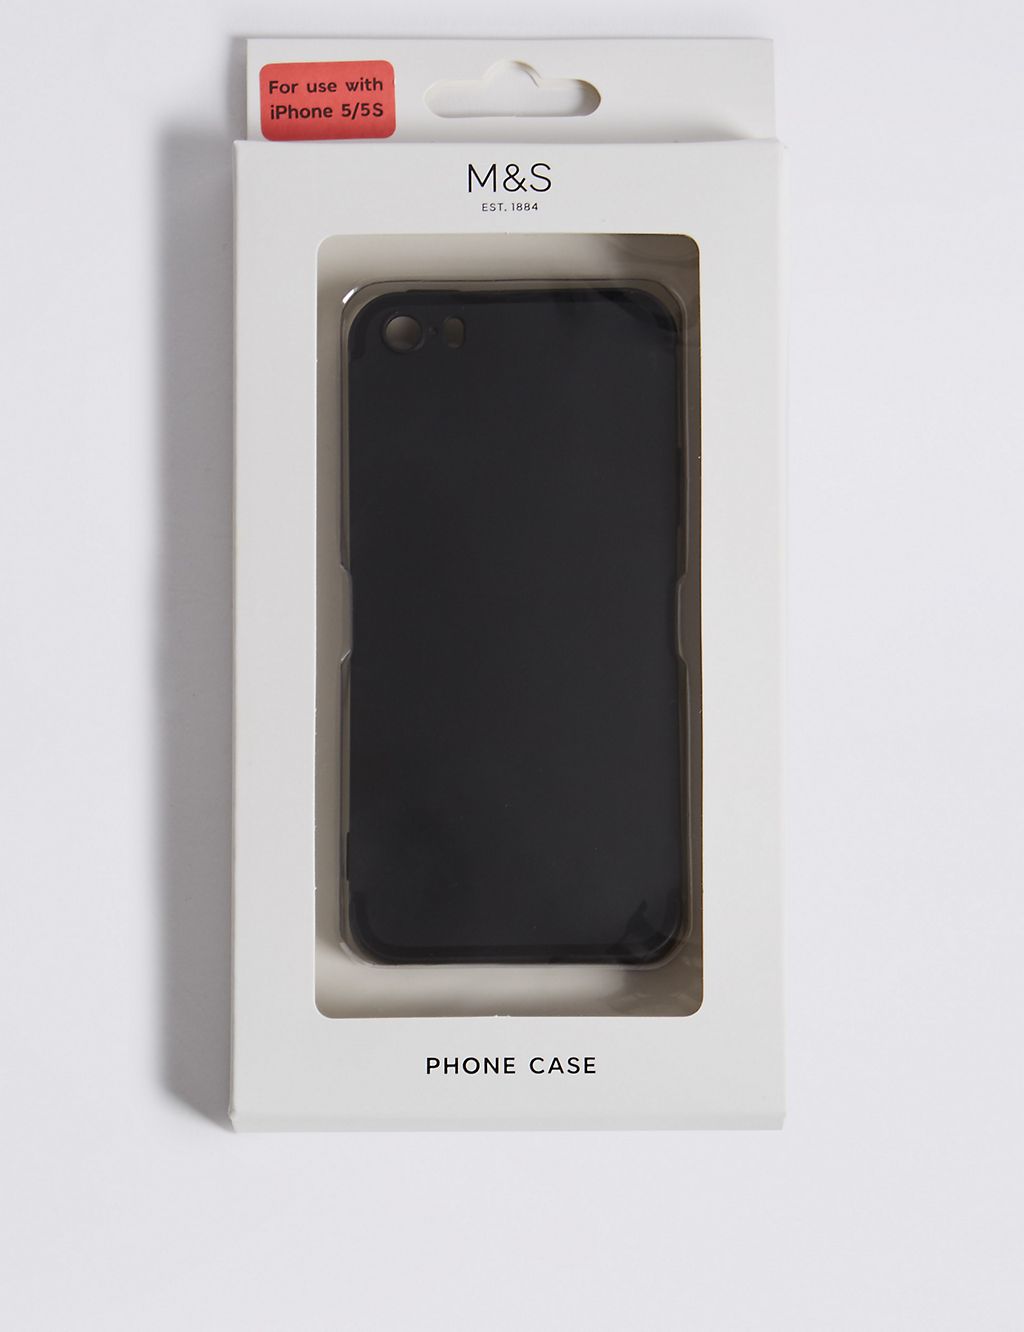 iPhone 5/5S Phone Case 4 of 4